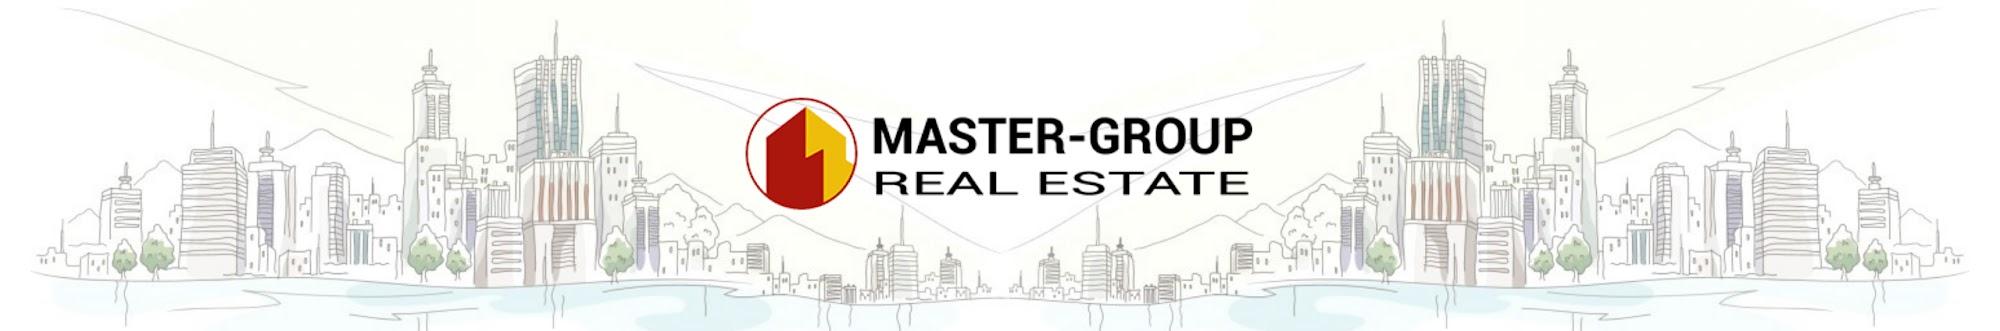 MASTER-GROUP Real Estate